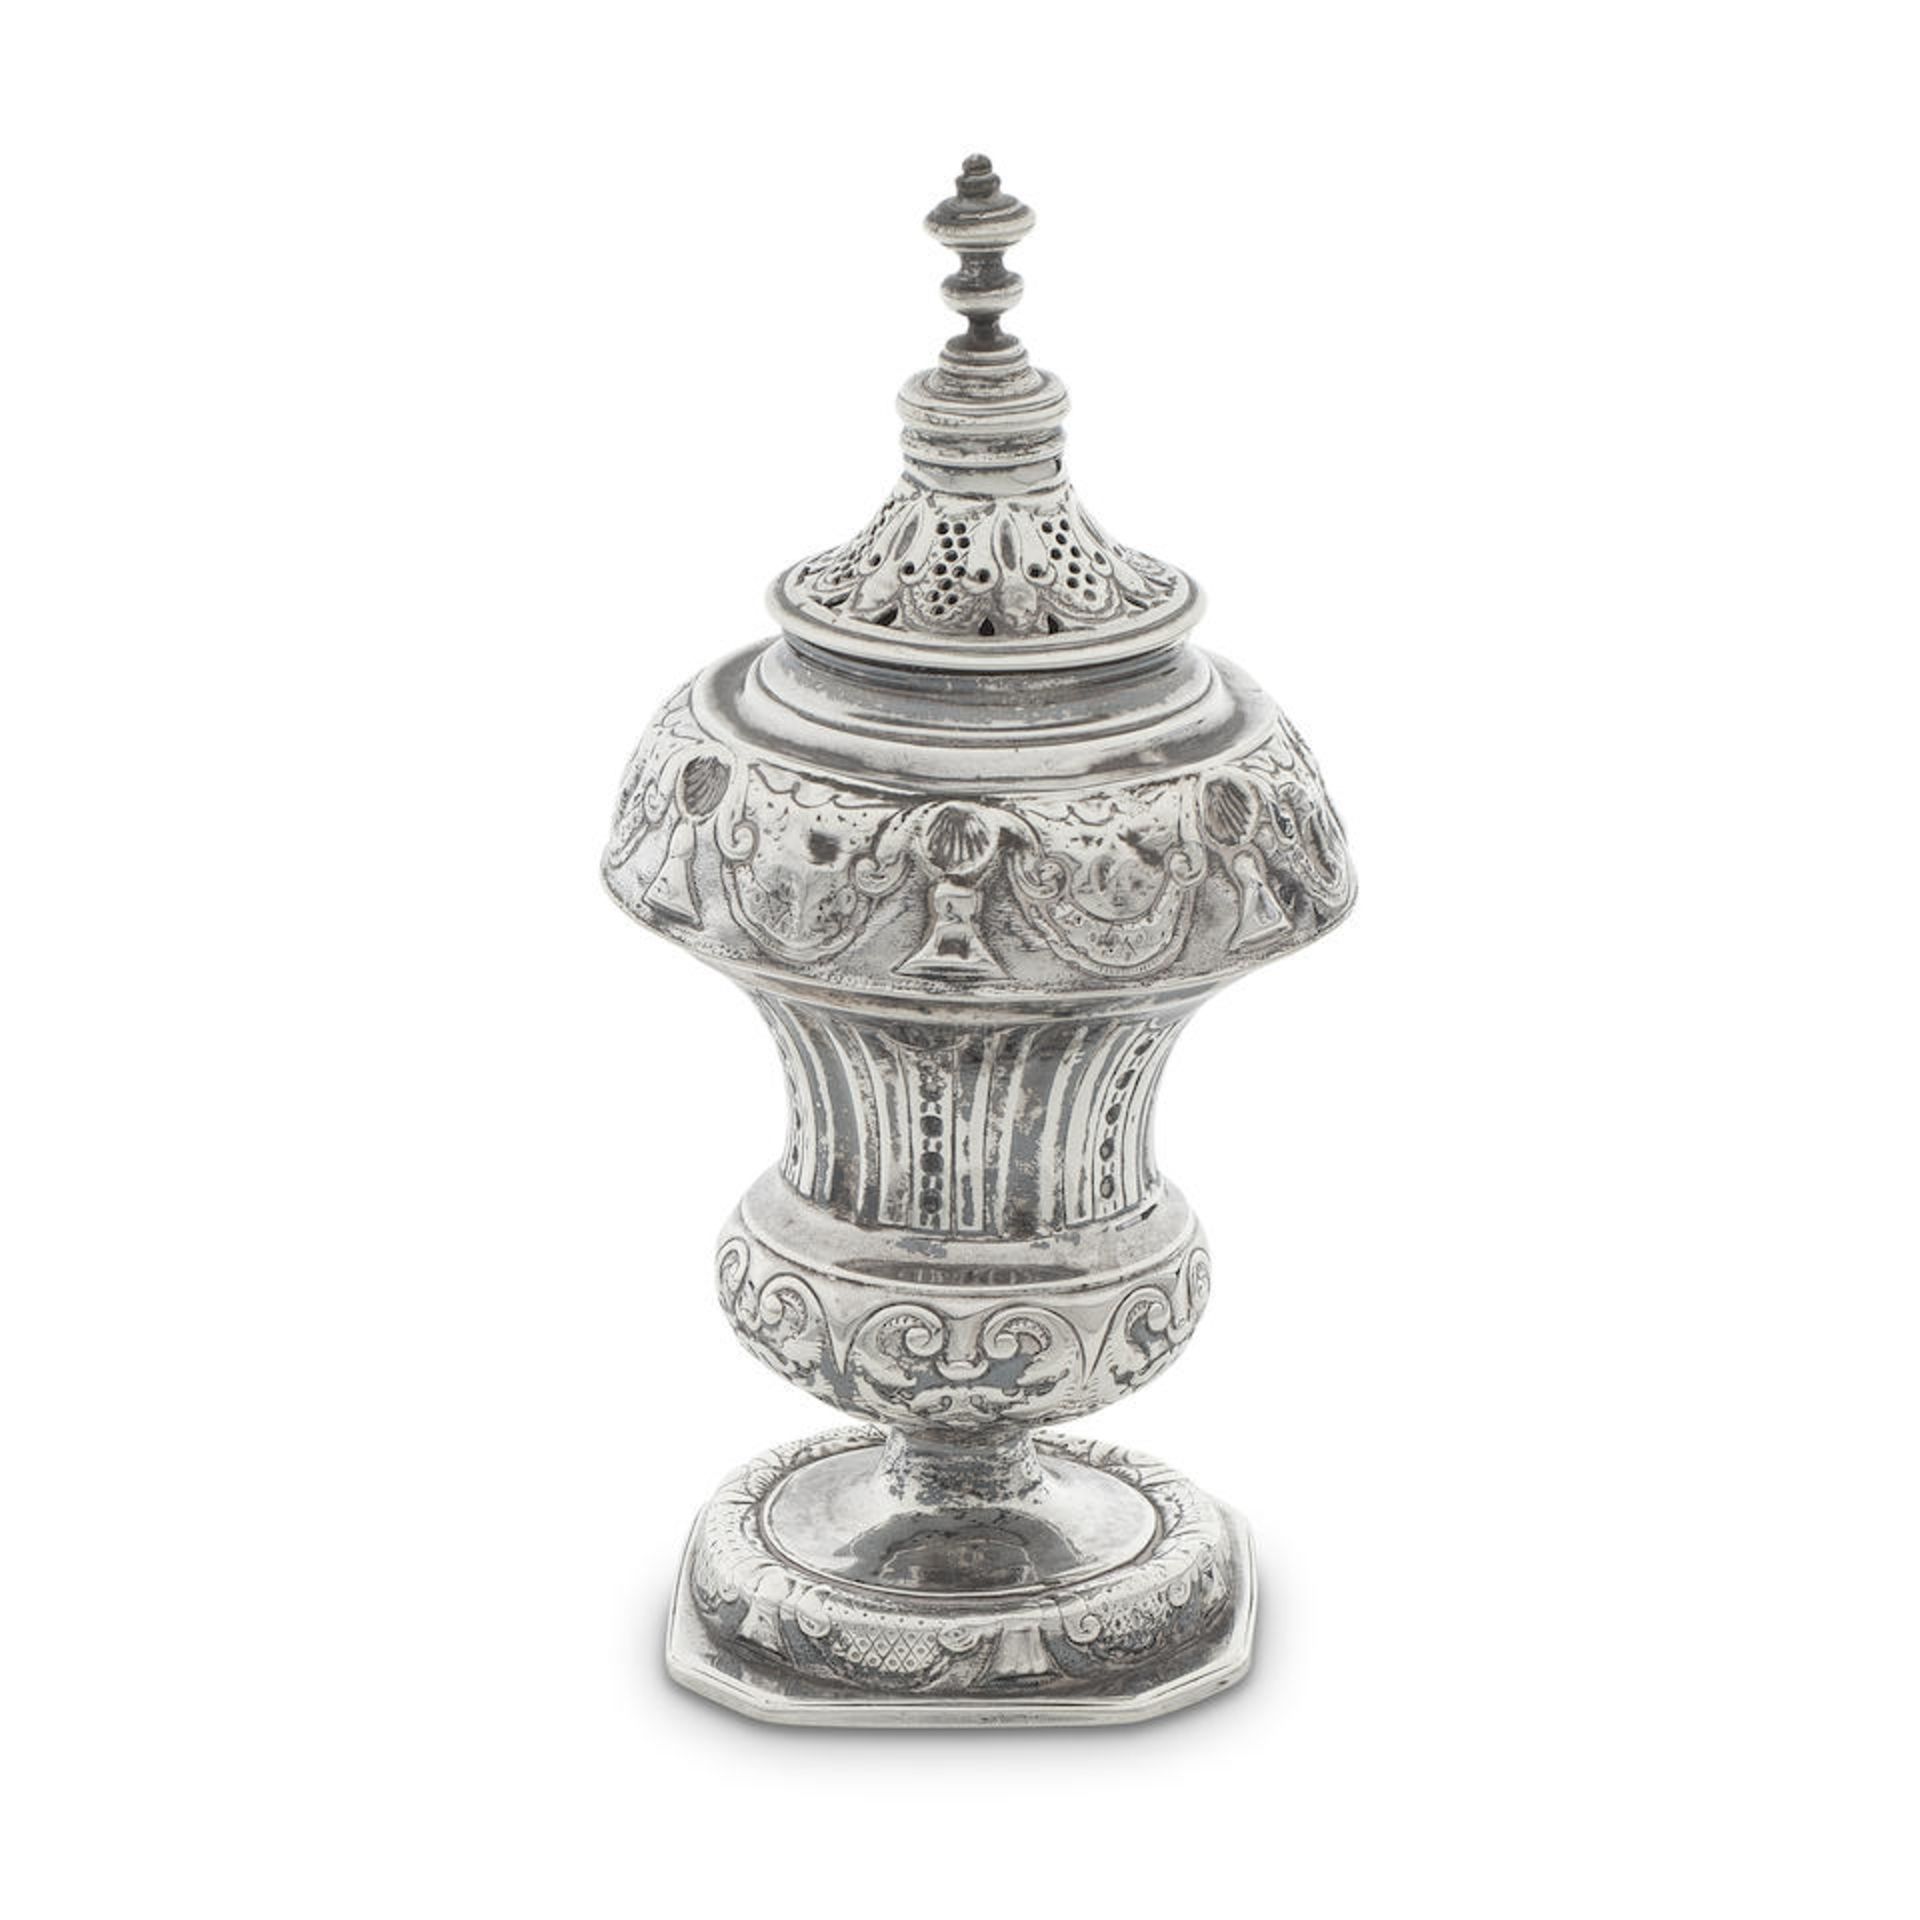 A Dutch silver condiment vase / shaker Casper Janszonius, Haarlem, 1743